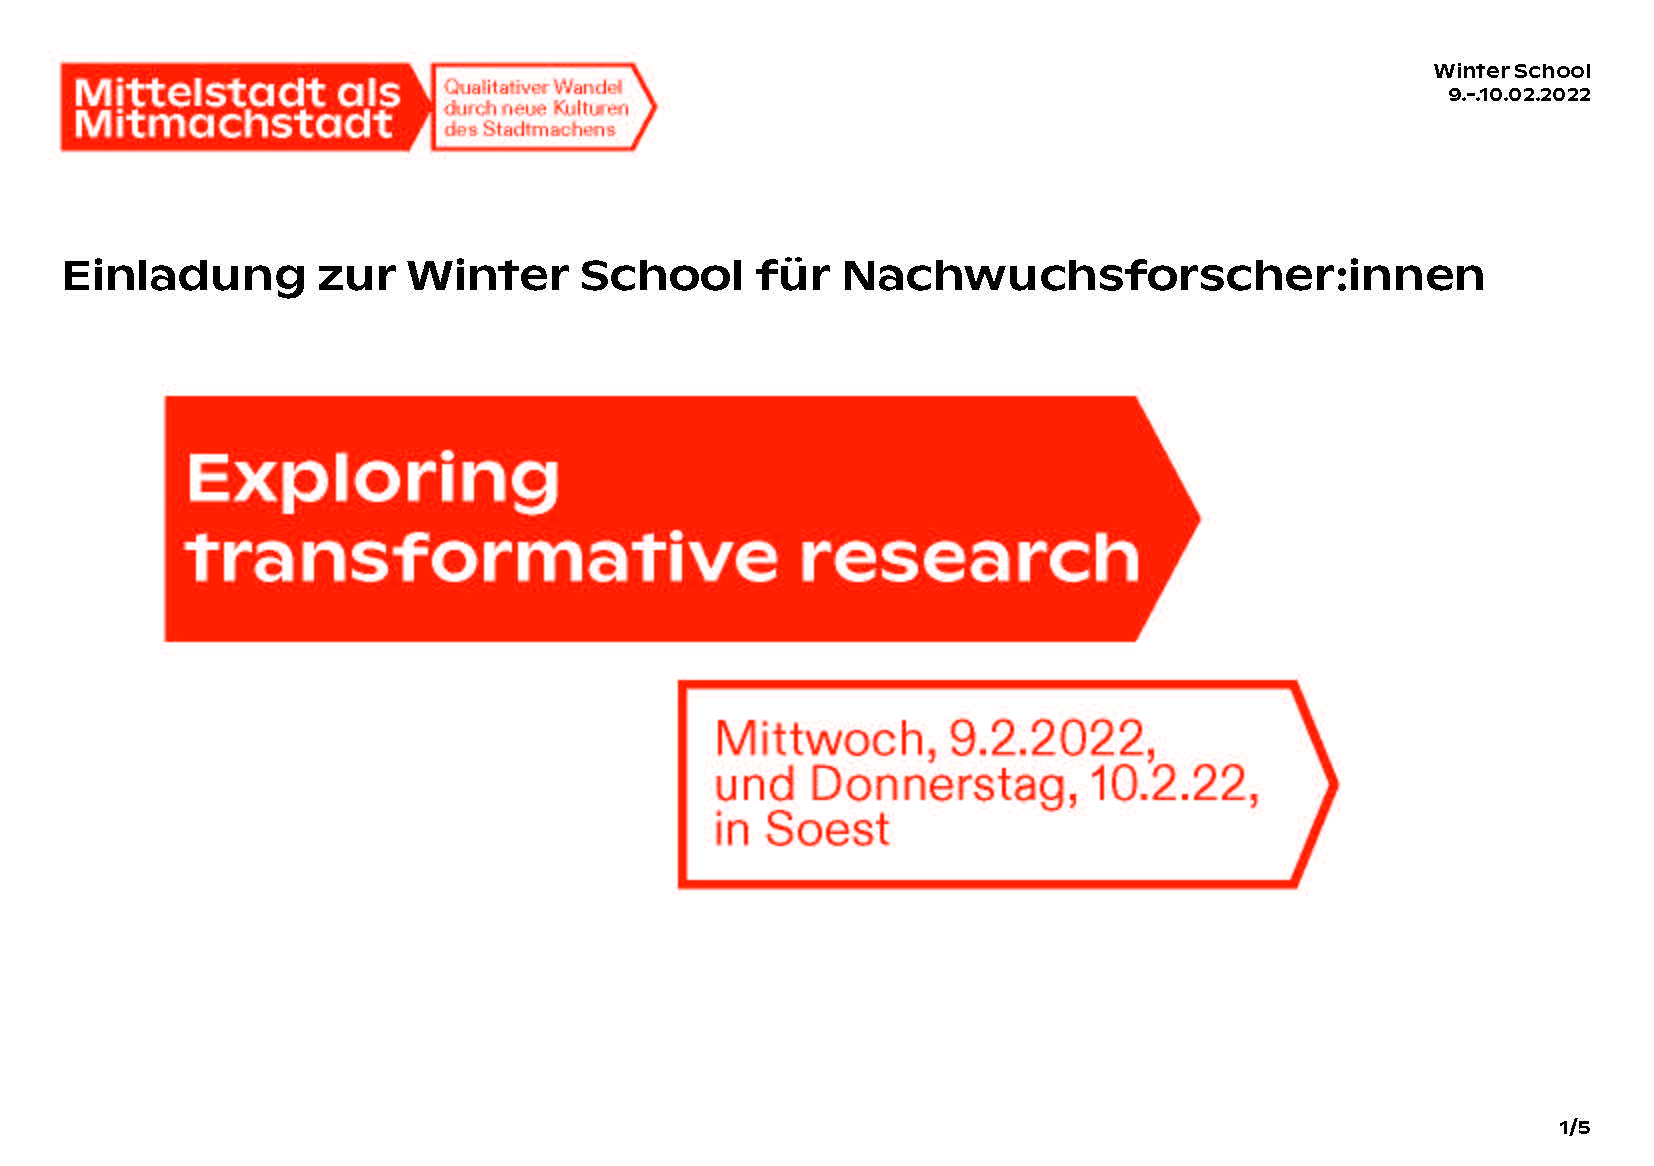 Winterschool Graduiertenkolleg "Mittelstadt als Mitmachstadt"